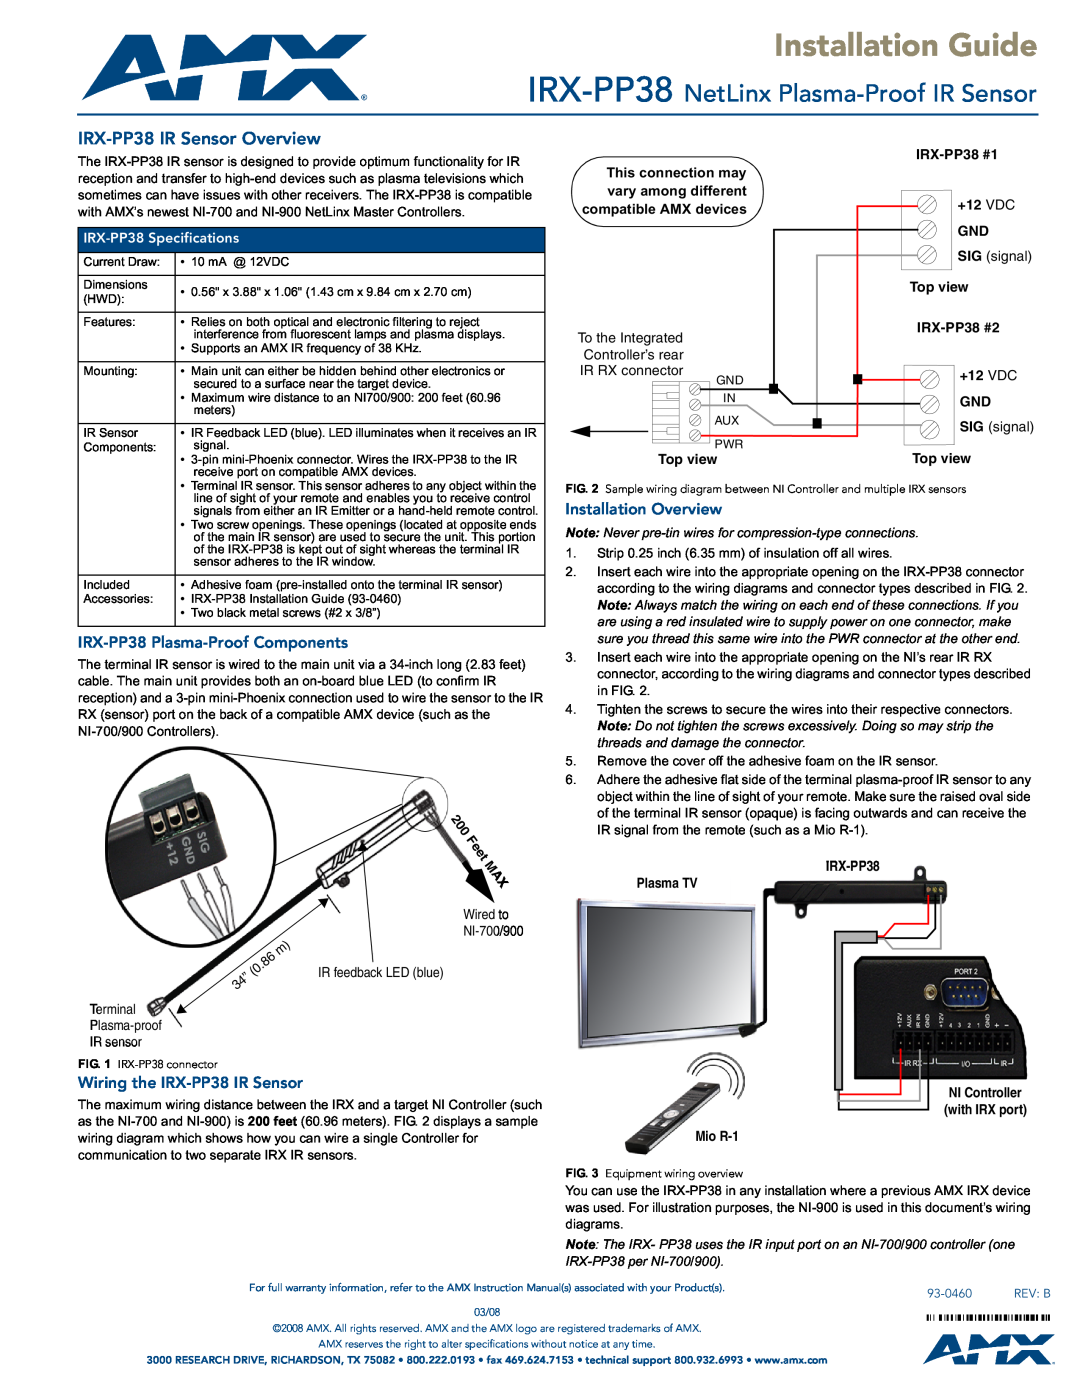 AMX warranty Installation Guide, IRX-PP38 NetLinx Plasma-ProofIR Sensor, 20 0 F e e t M A, IRX-PP38IR Sensor Overview 